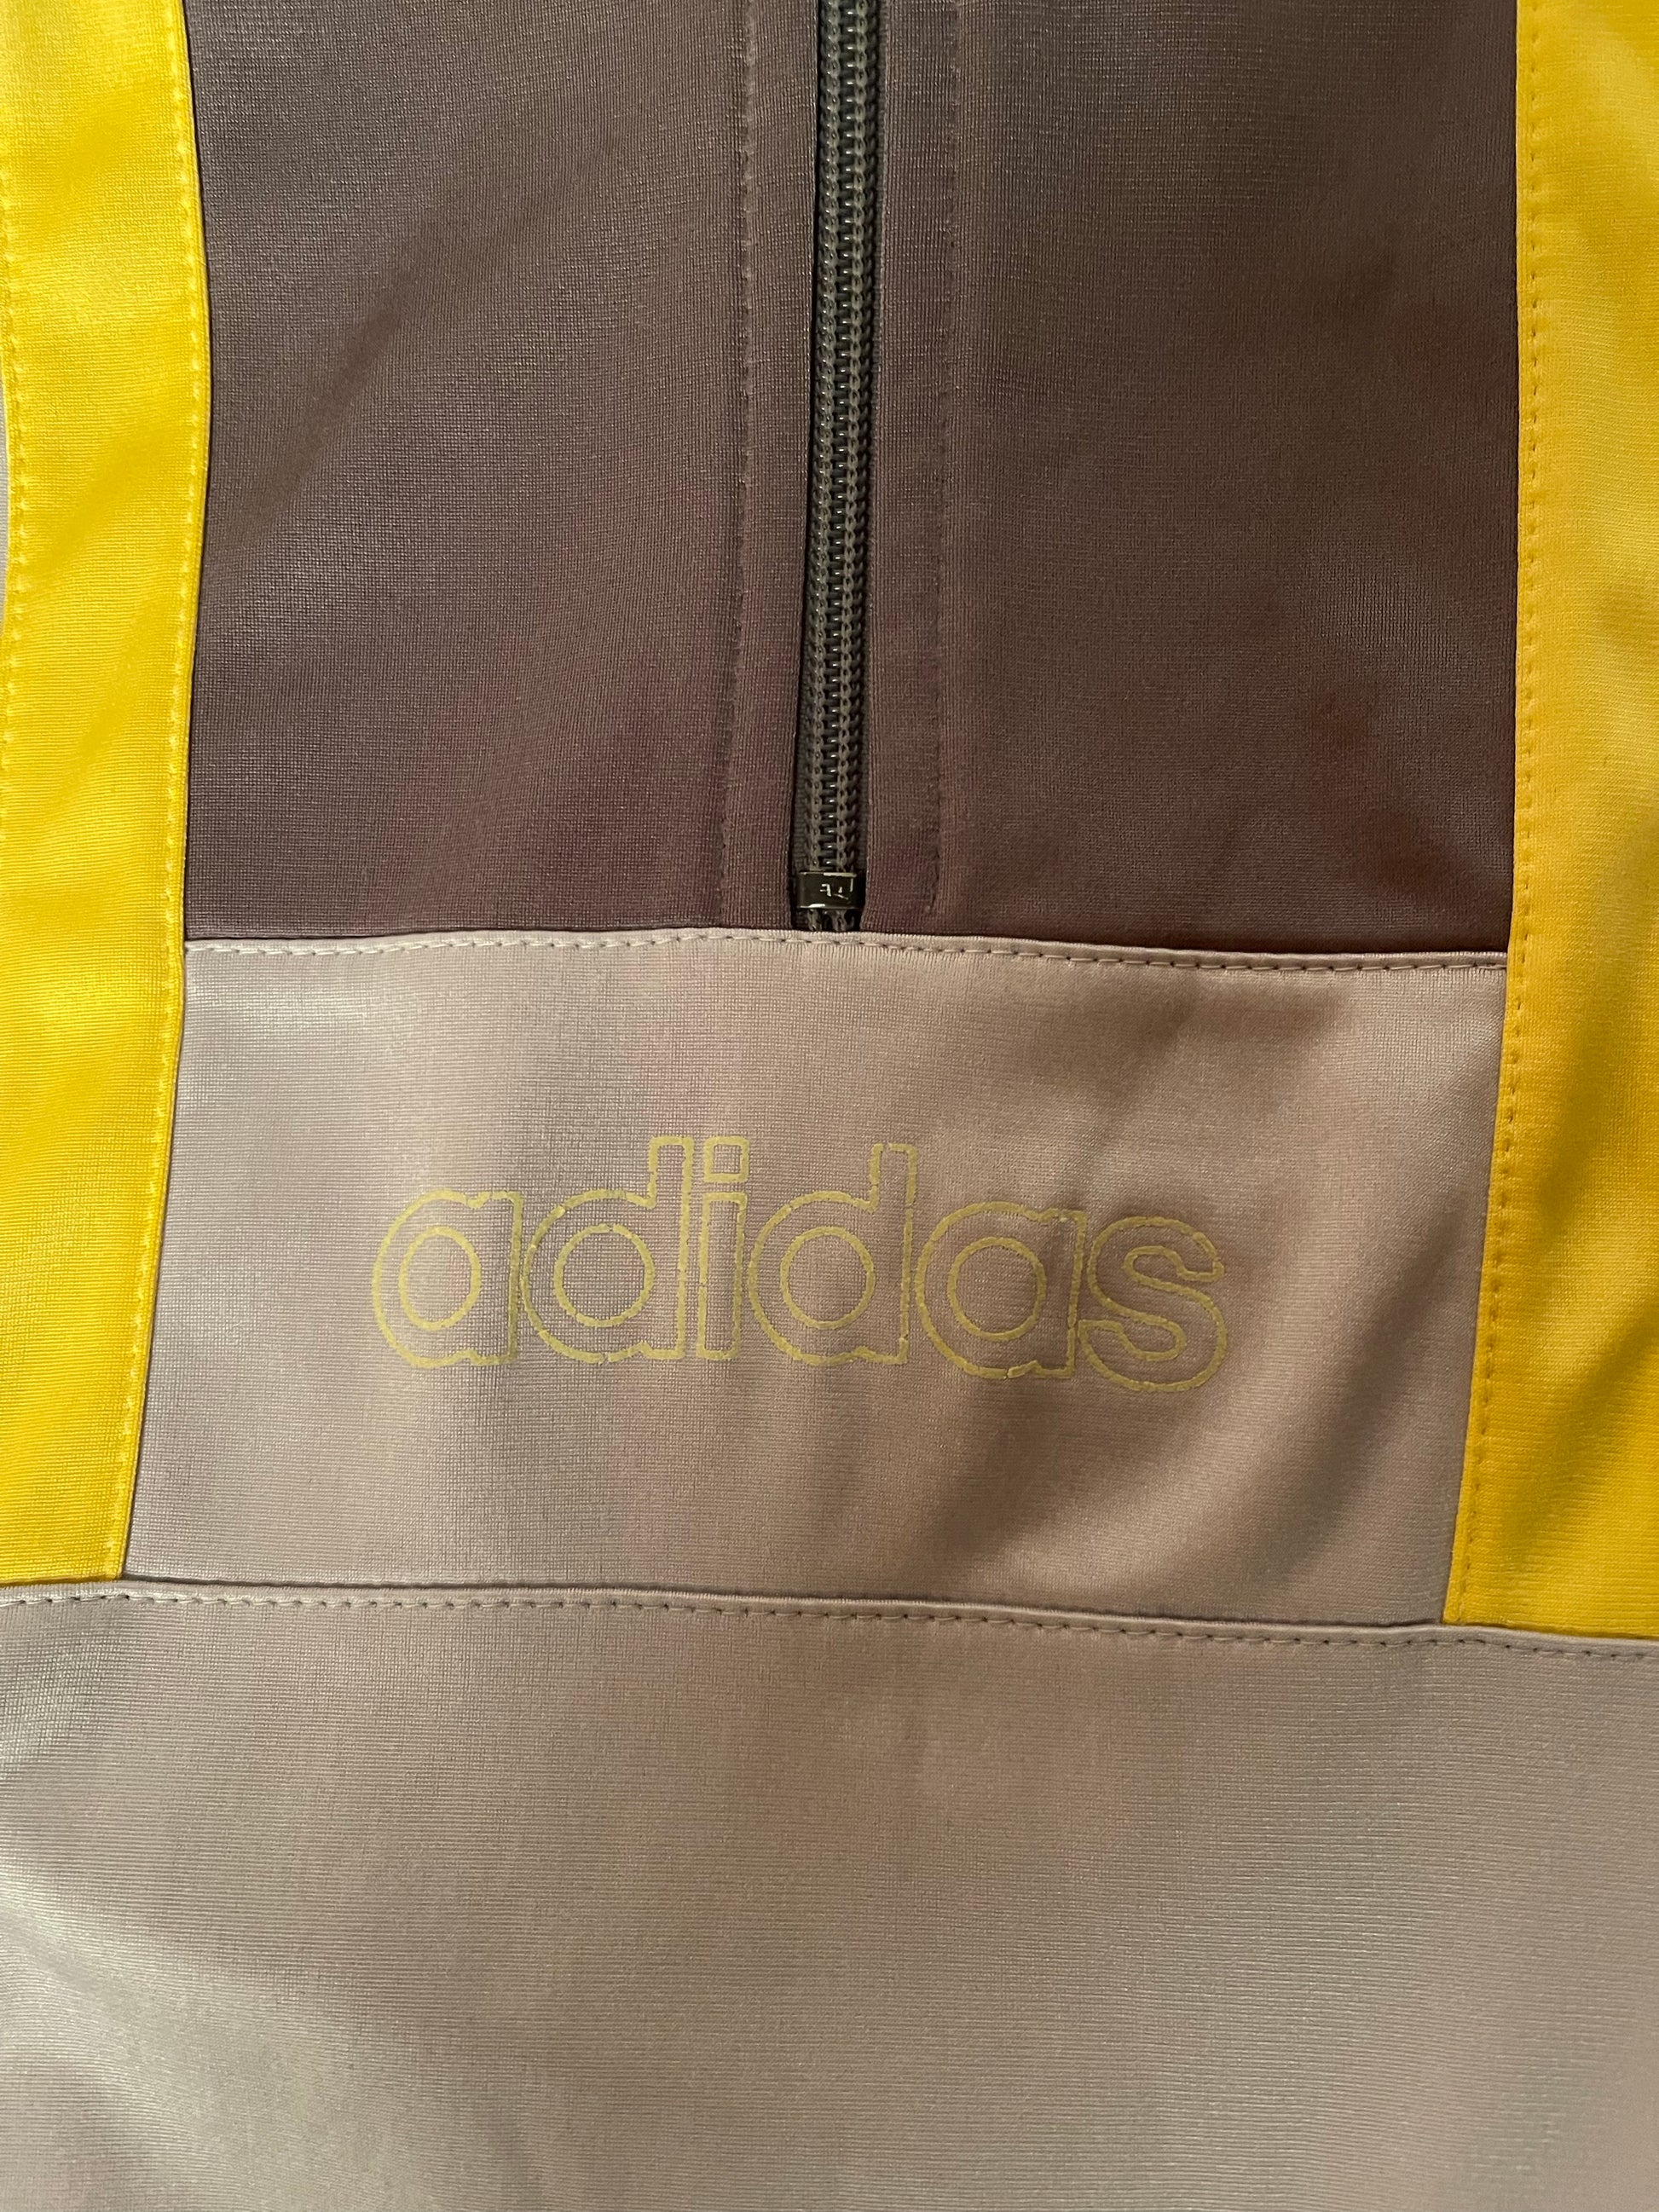 Vintage 80's Adidas Sweatshirt Hoodie Jacket Size M-L Made in Western Germany Grey Yellow